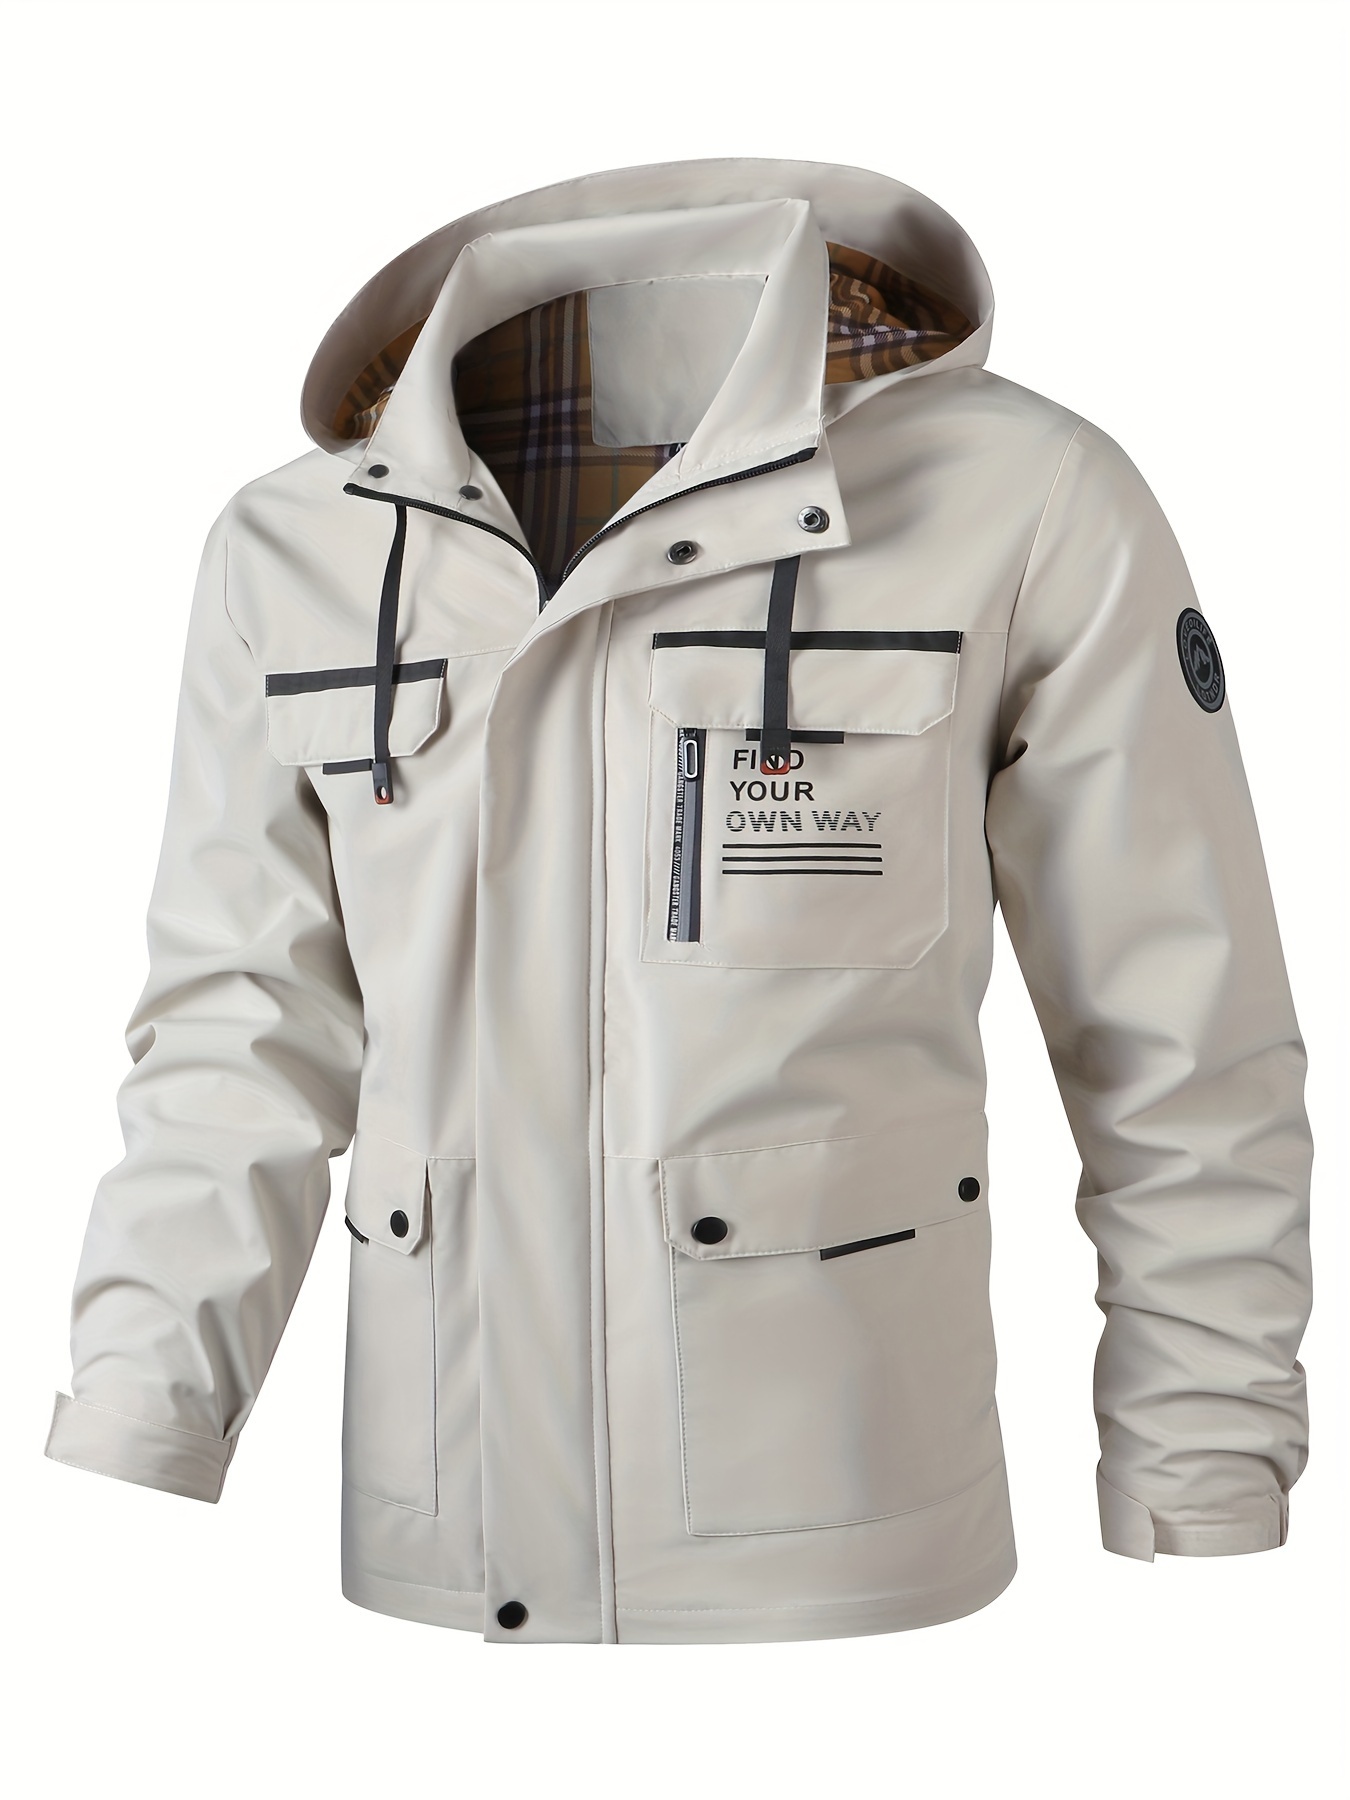 Men's Casual Hooded Windbreaker Jacket, Chic Multi Pocket Jacket For Spring Fall